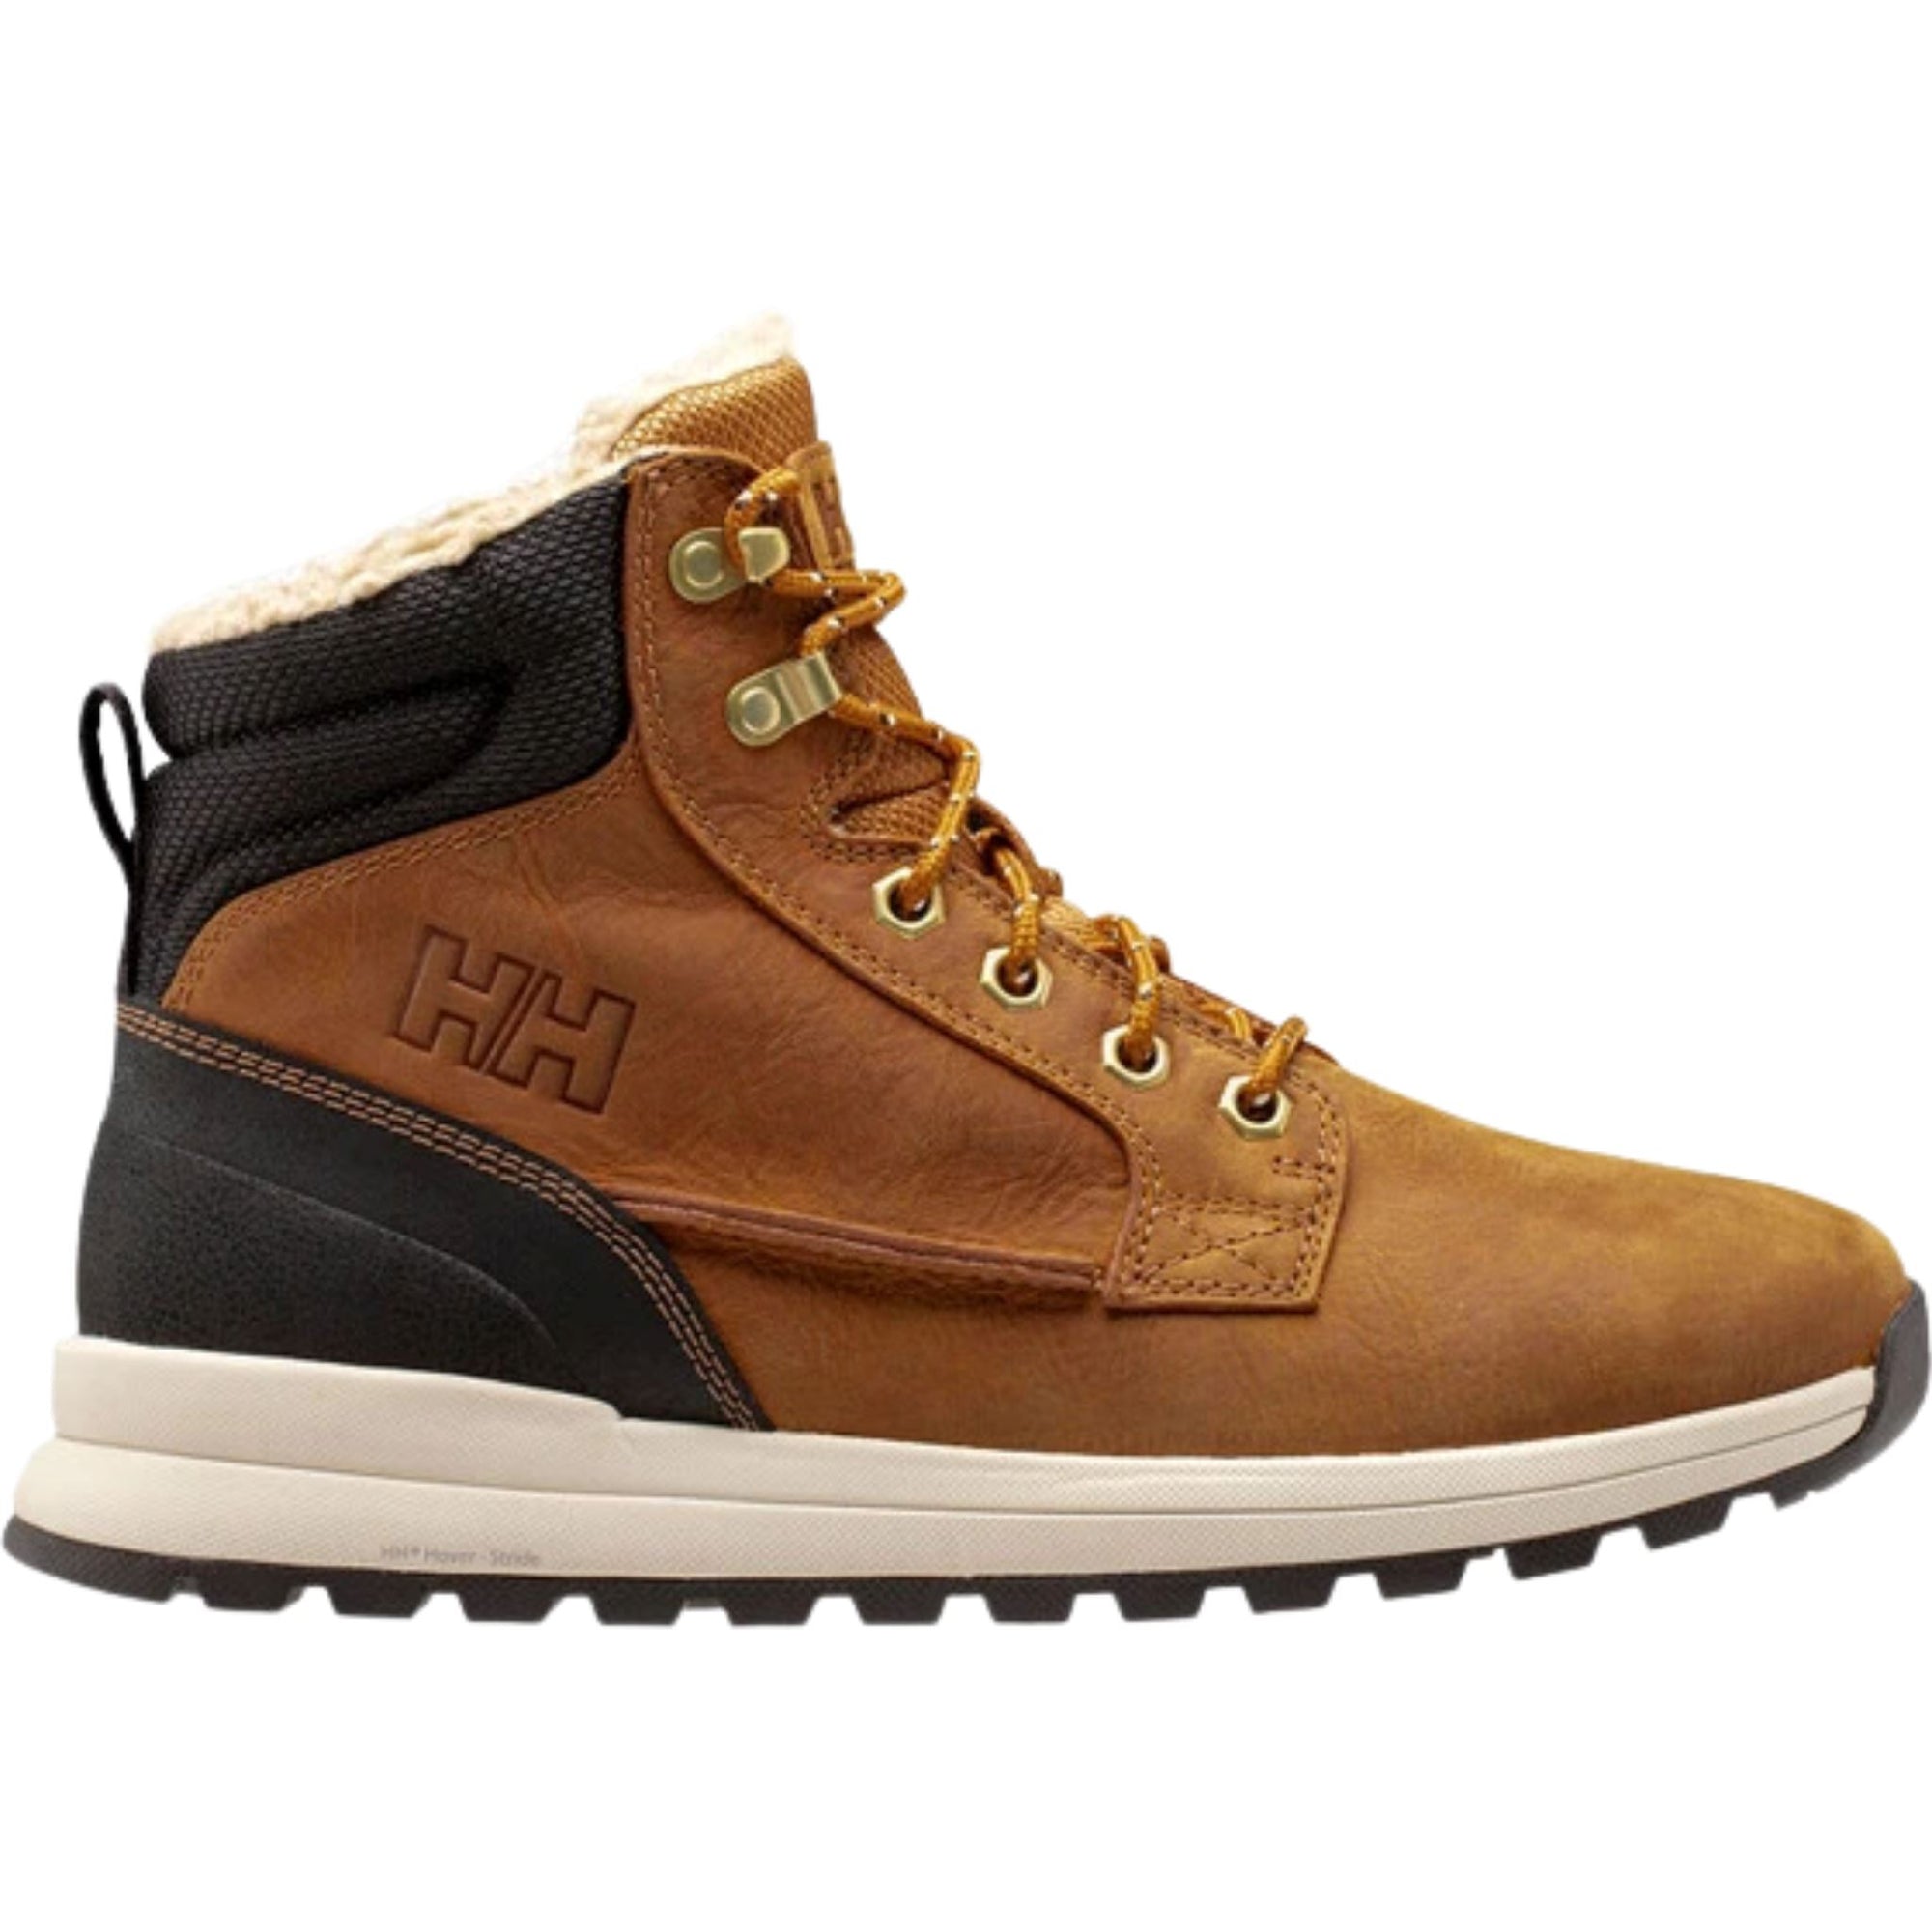 Mens Helly Hansen Kelvin LX Boot - New Wheat Footwear Helly Hansen 40 EU / 7 US 